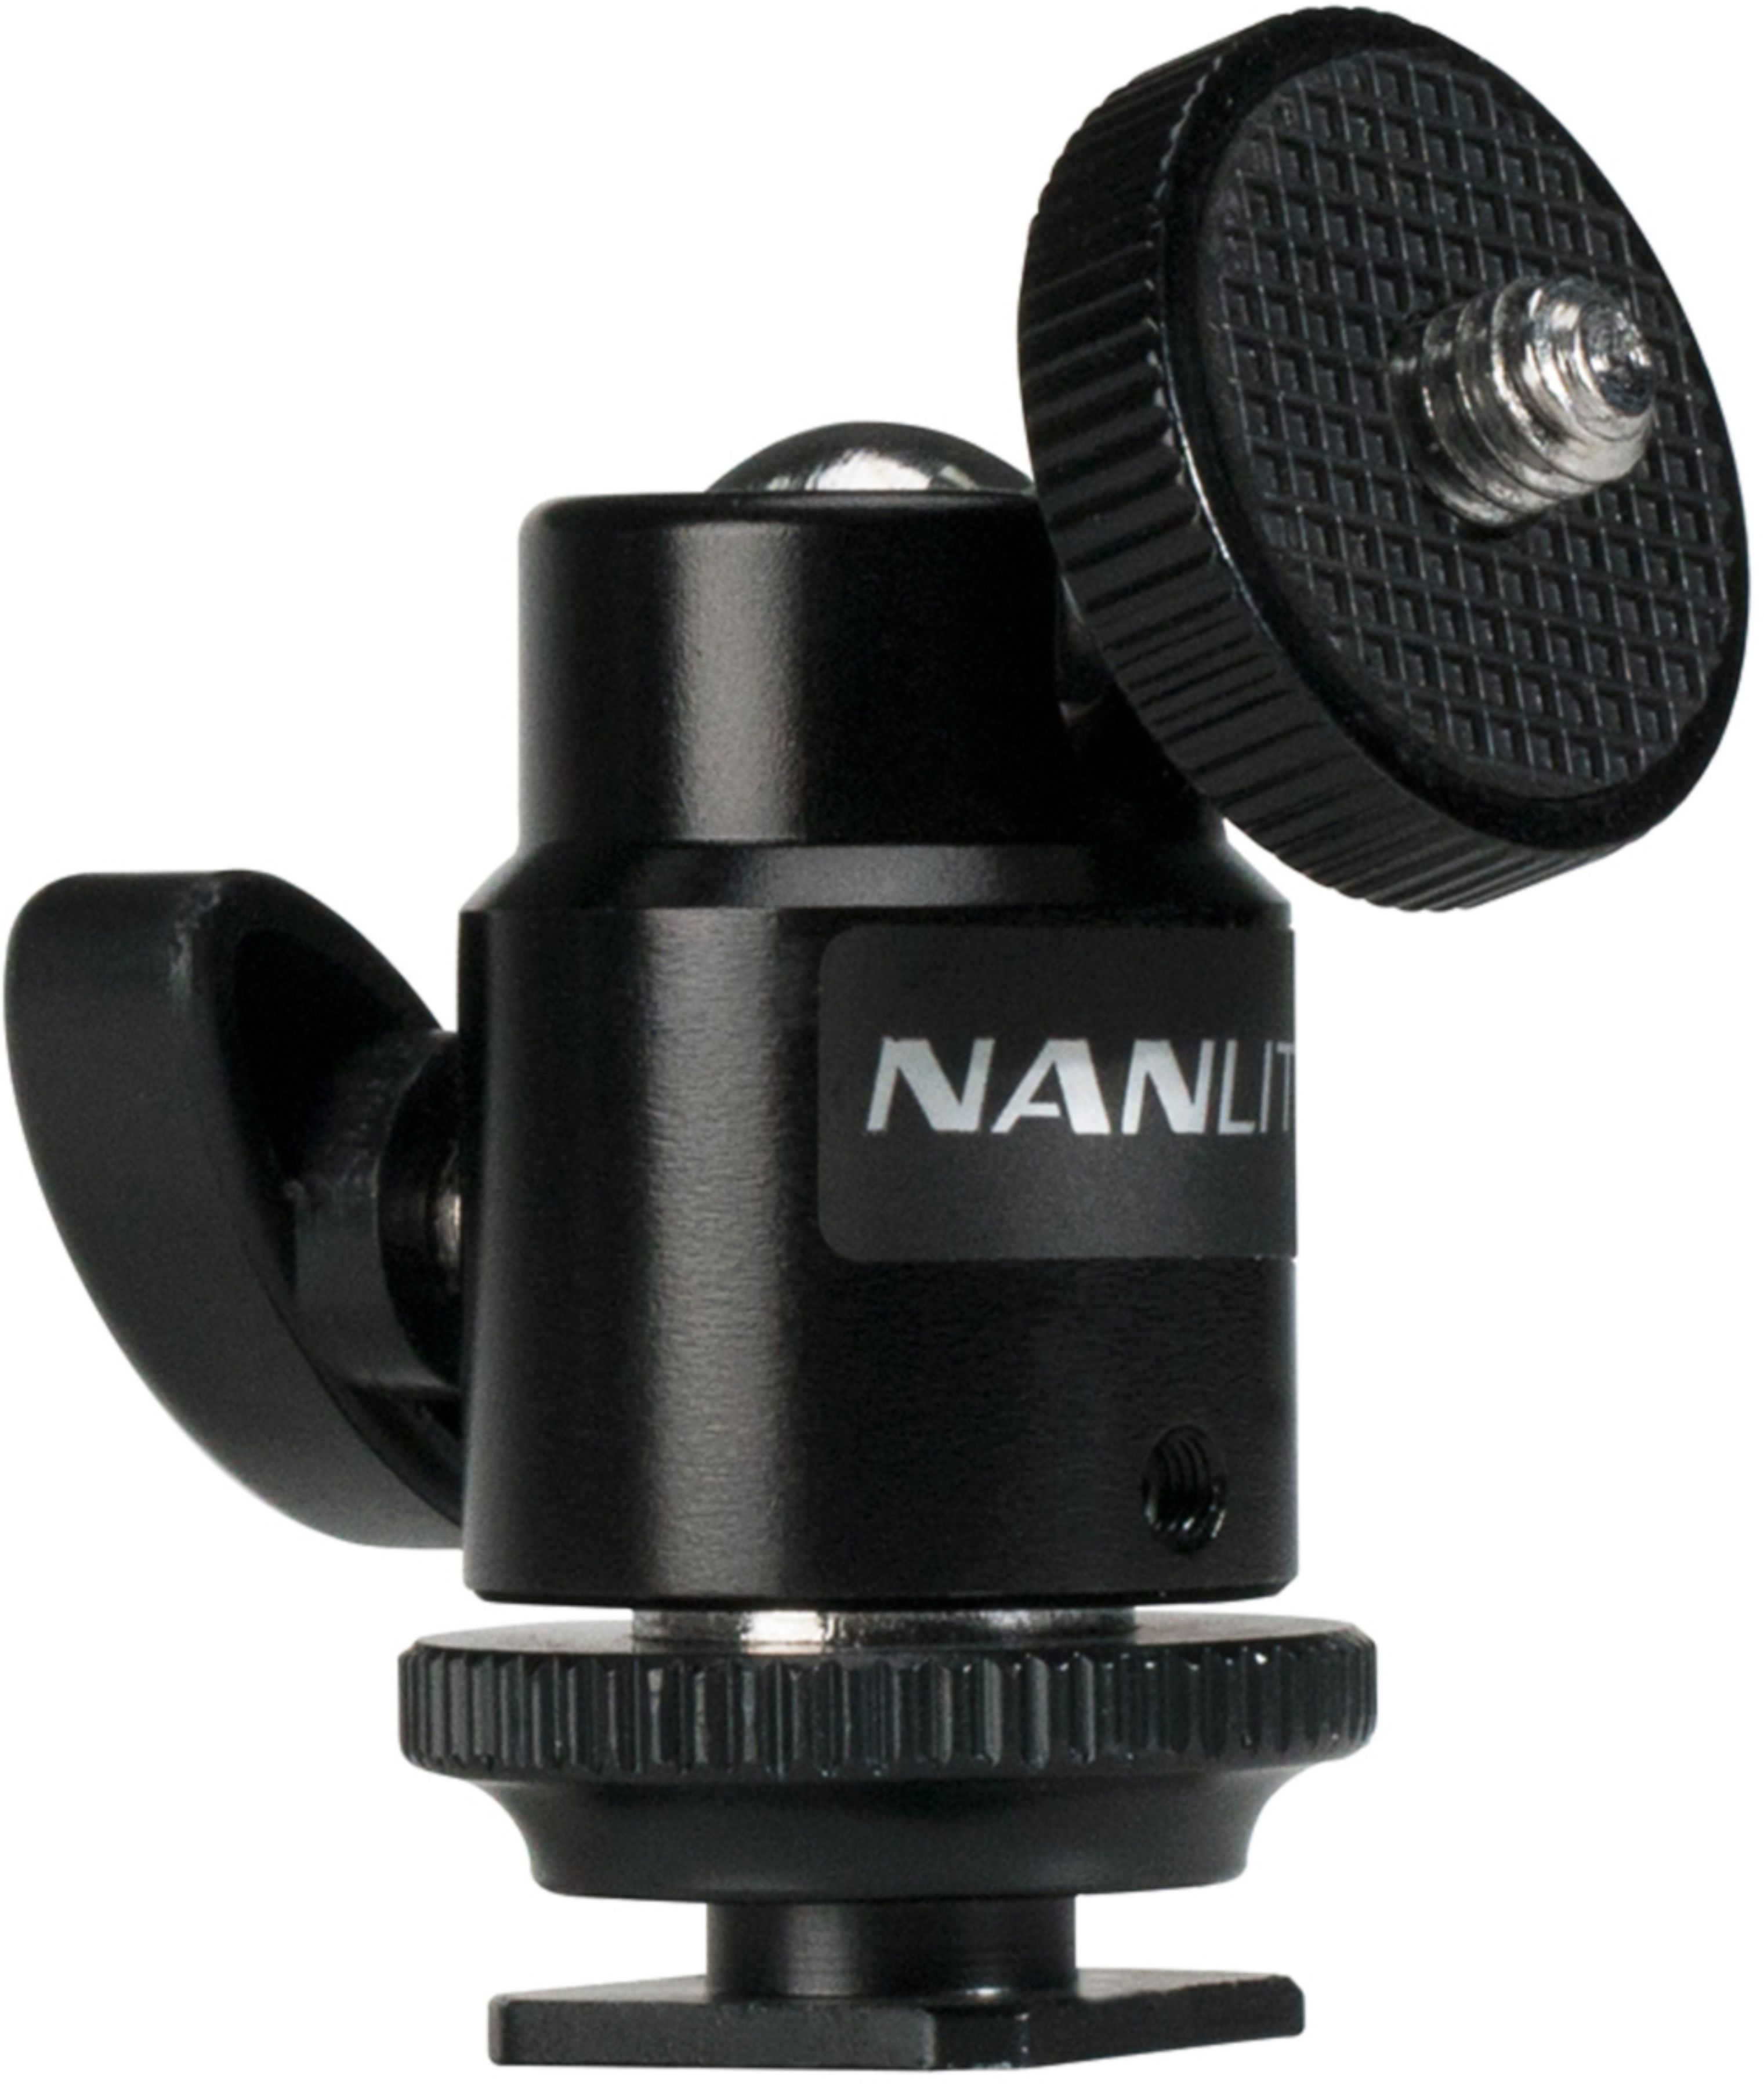 CLOVER Mini Ball Head with 1/4 Thread Screw Hot Shoe Bracket Holder Mount Tripod Stabilizer for DSLR Camera DV LED Light 